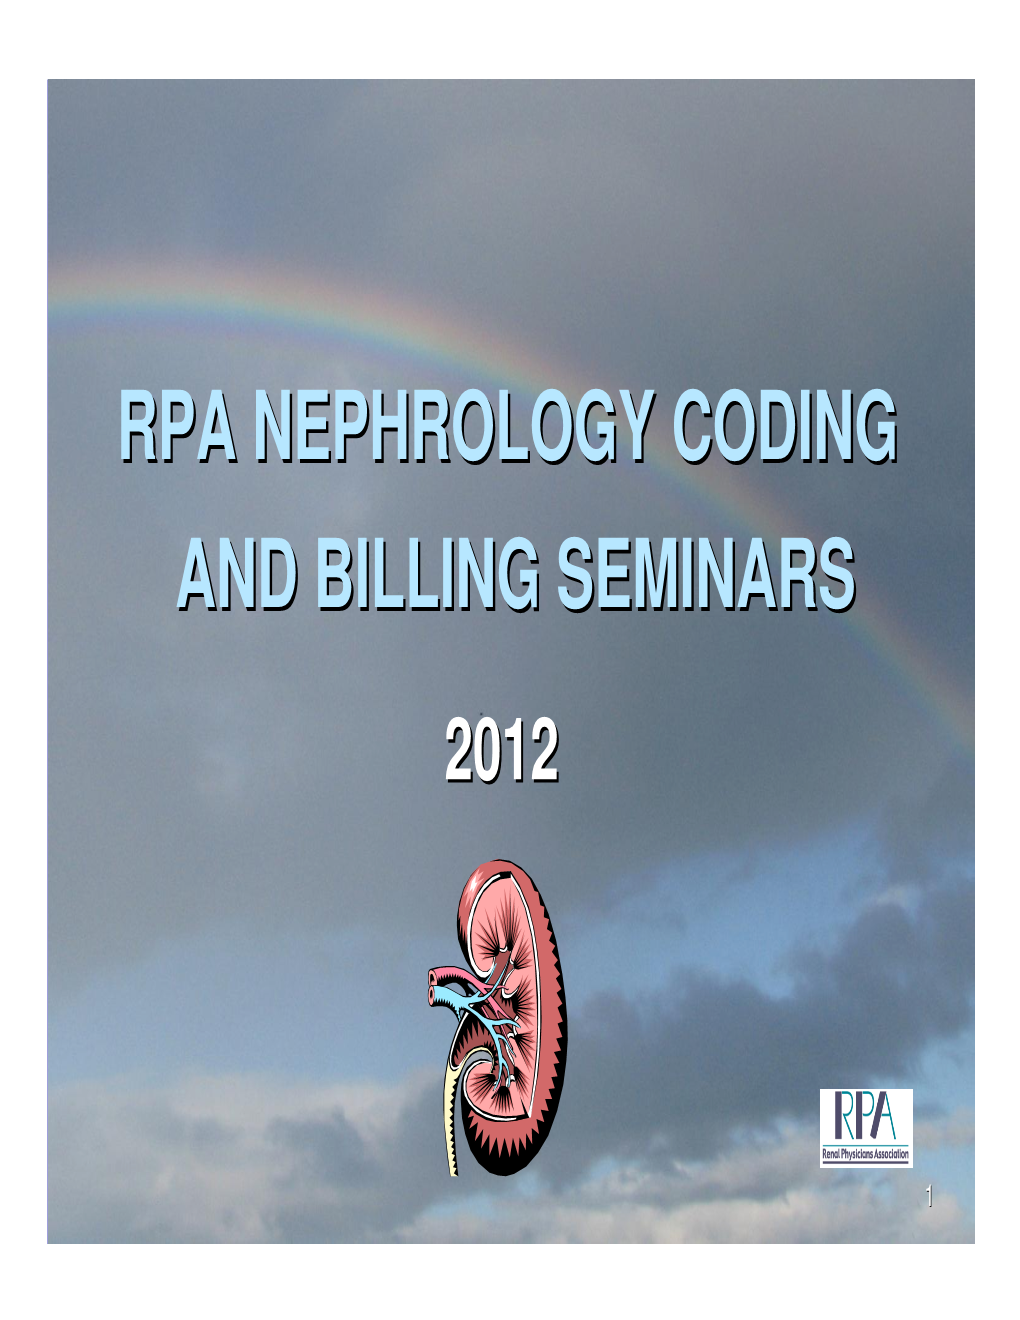 Rpa Nephrology Coding and Billing Seminars